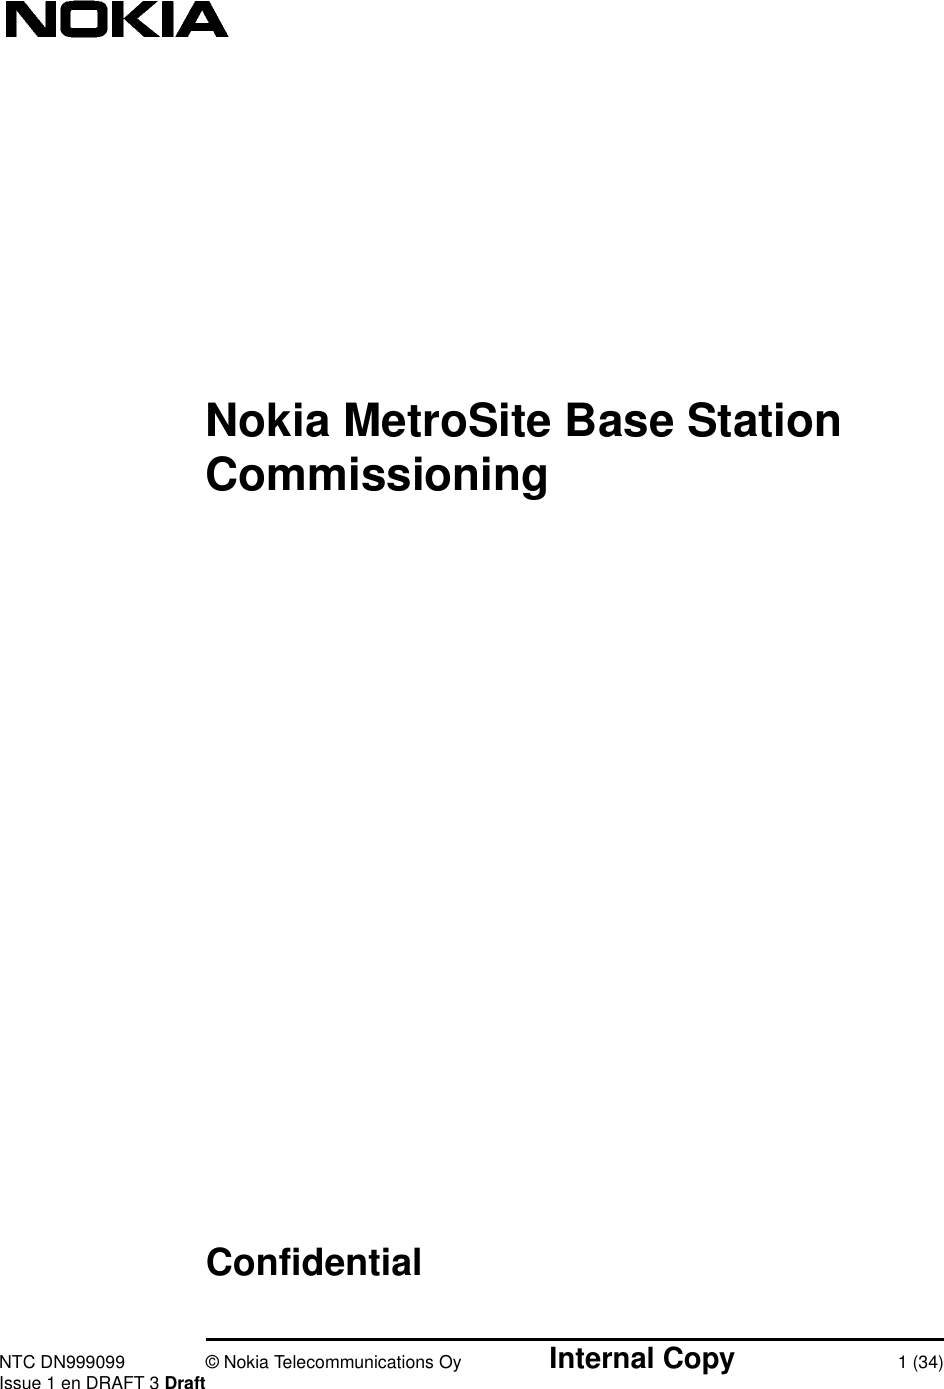 NTC DN999099 © Nokia Telecommunications Oy Internal Copy 1 (34)Issue 1 en DRAFT 3 DraftConfidentialNokia MetroSite Base StationCommissioning